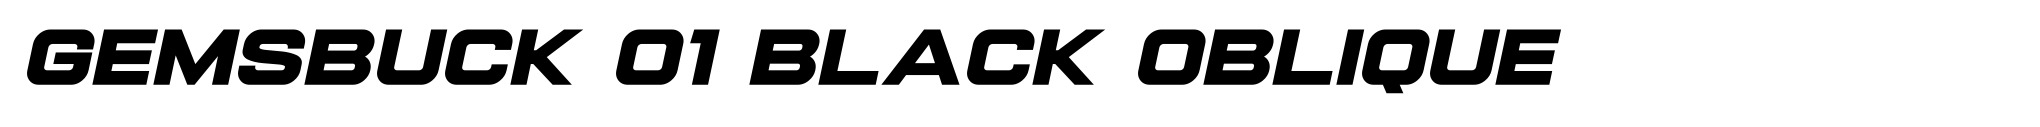 Gemsbuck 01 Black Oblique image